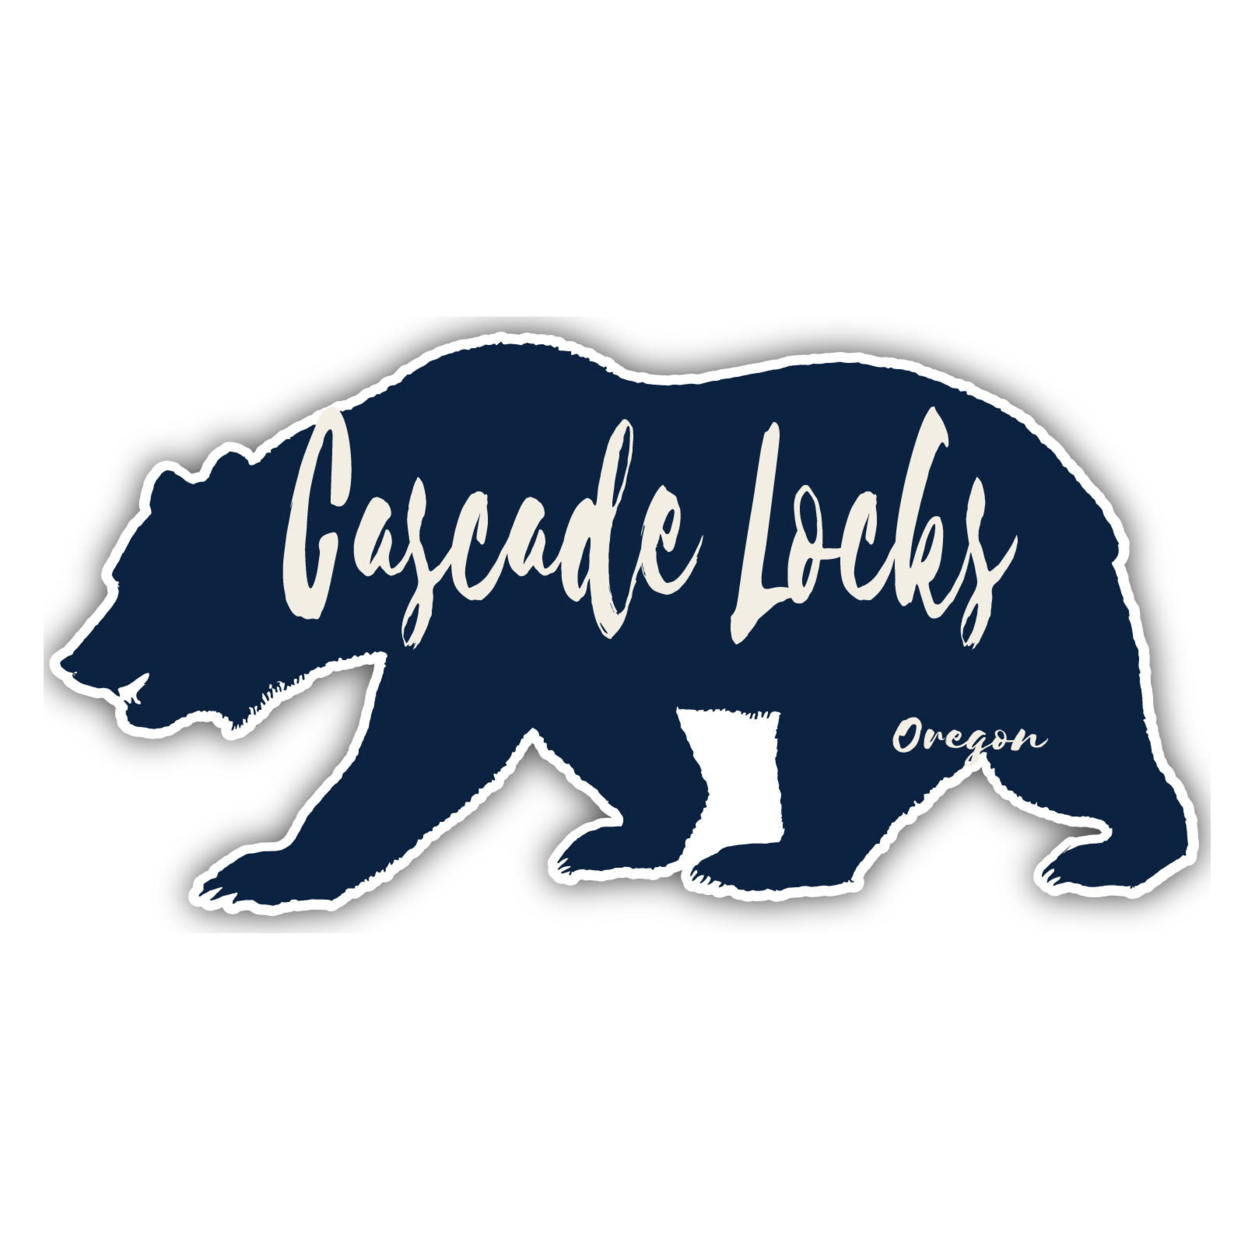 Cascade Locks Oregon Souvenir Decorative Stickers (Choose Theme And Size) - 4-Pack, 8-Inch, Adventures Awaits